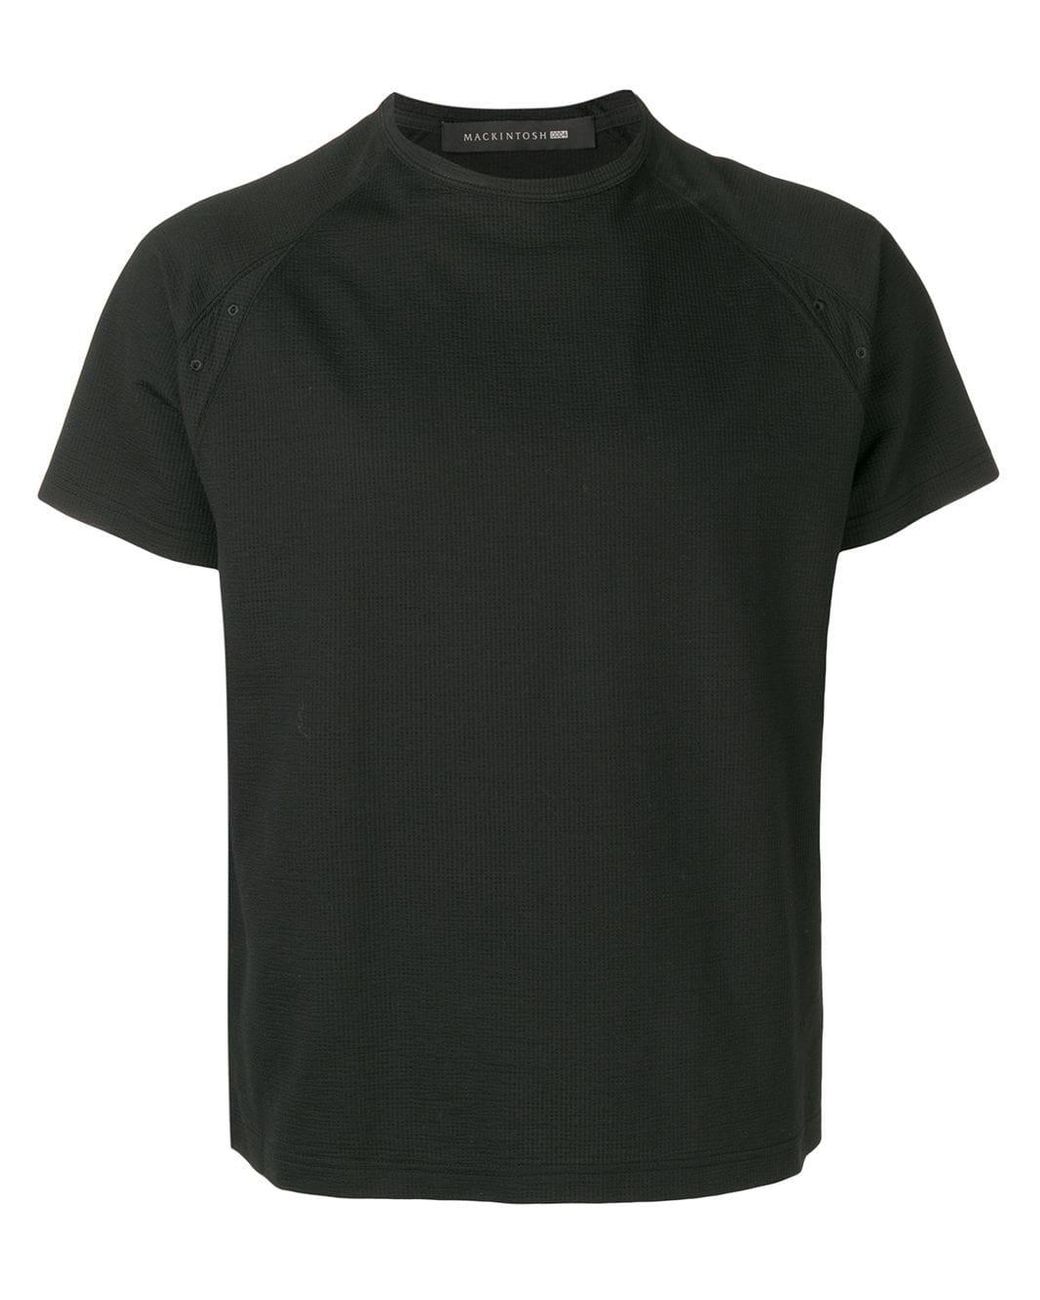 Mackintosh 0004 Black Cotton Blend 0004 T-shirt in Black for Men - Lyst